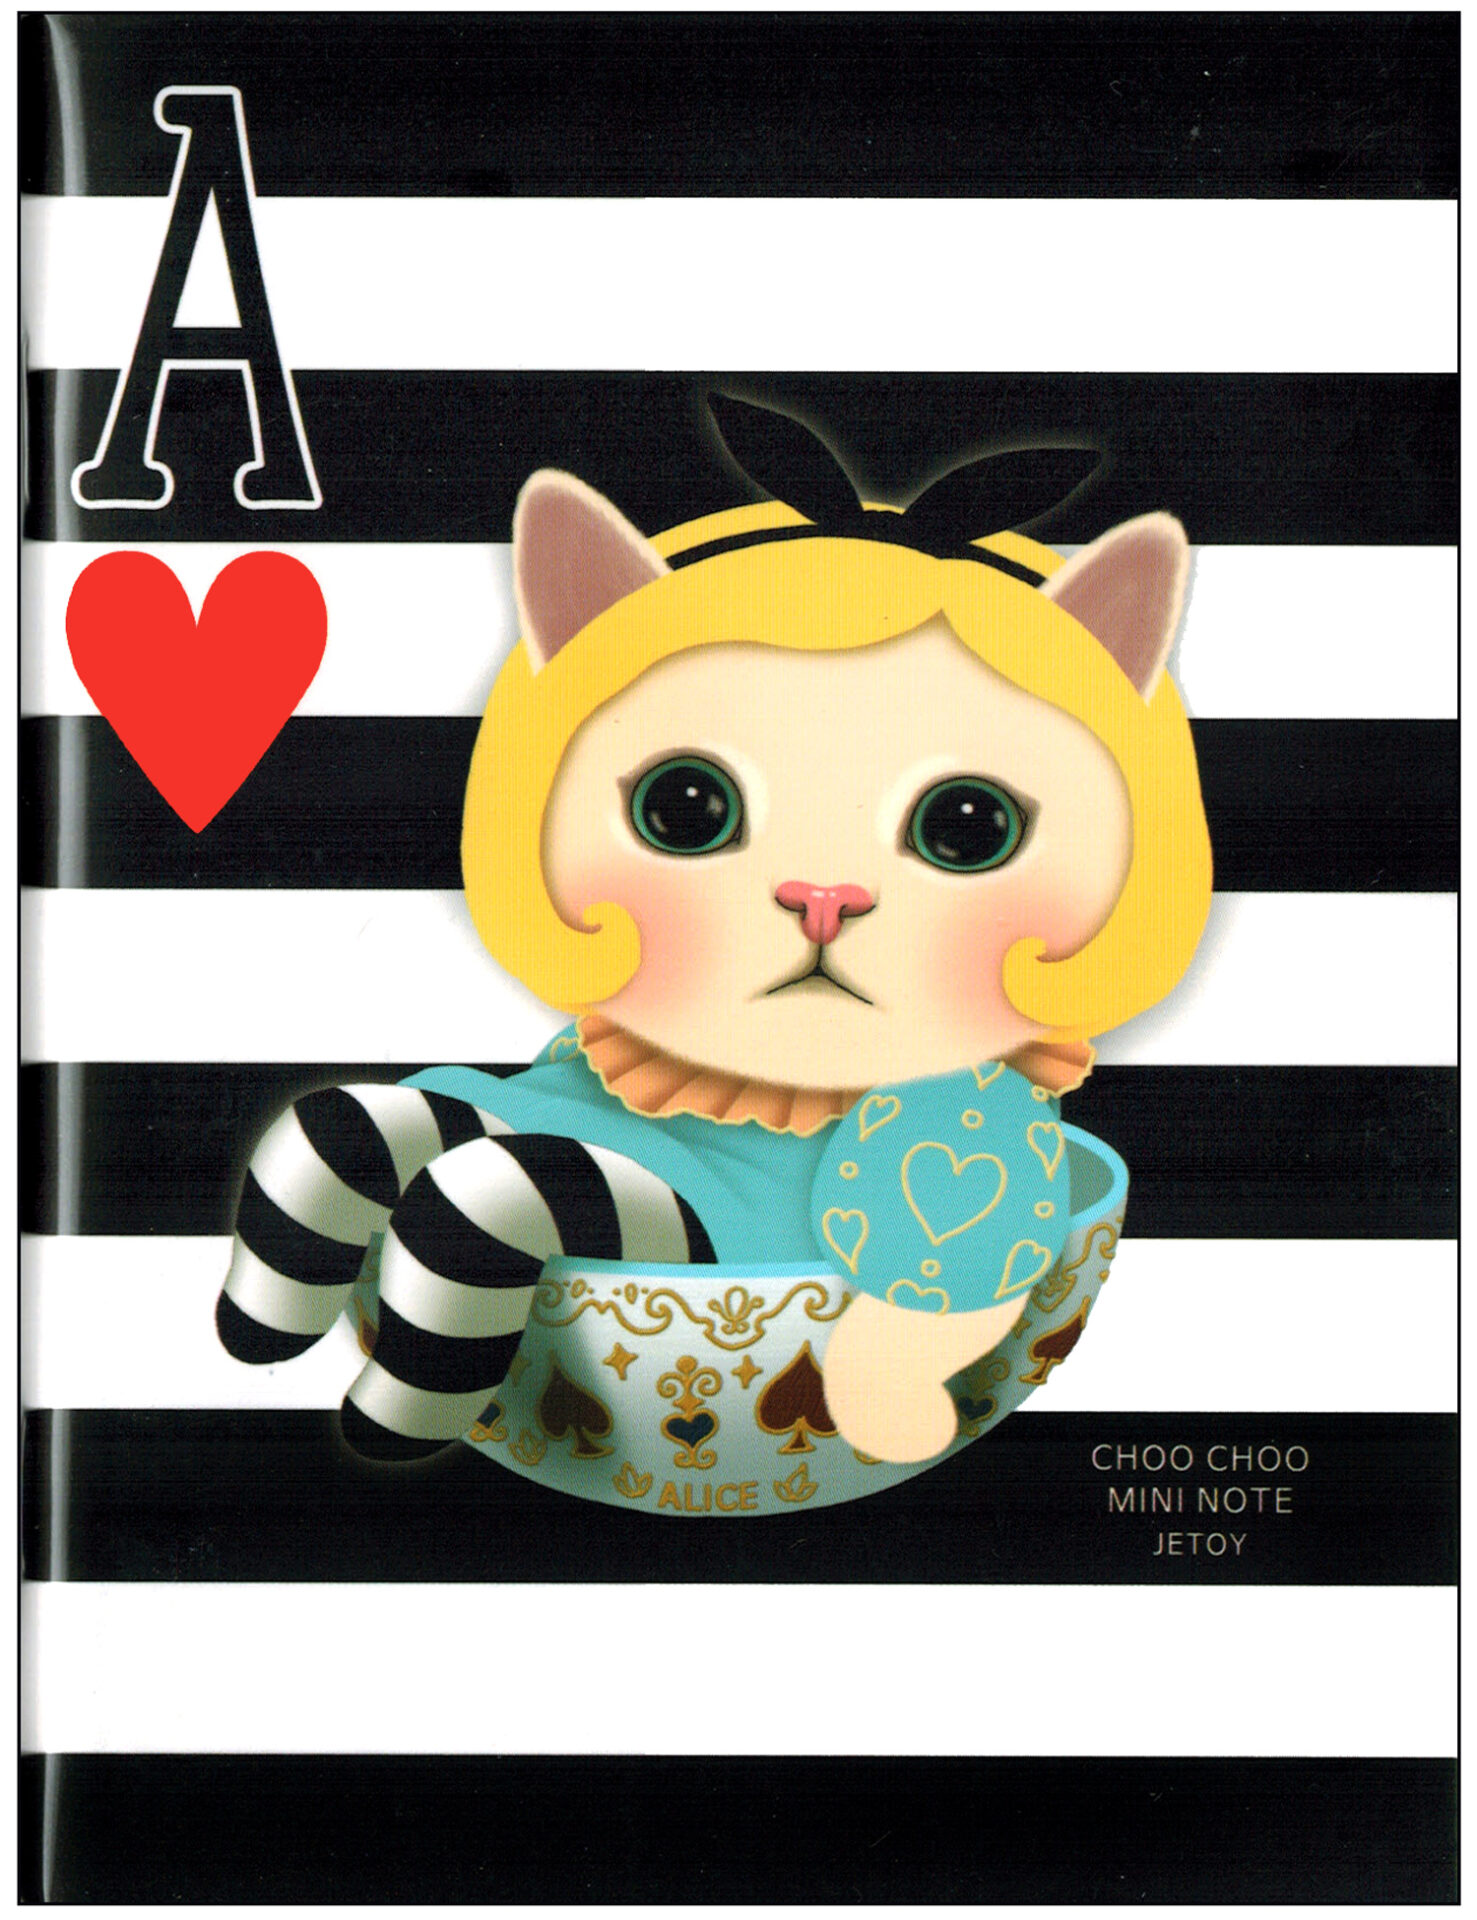 Jetoy Choo Choo Cat Mini Notebook: Alice in Wonderland